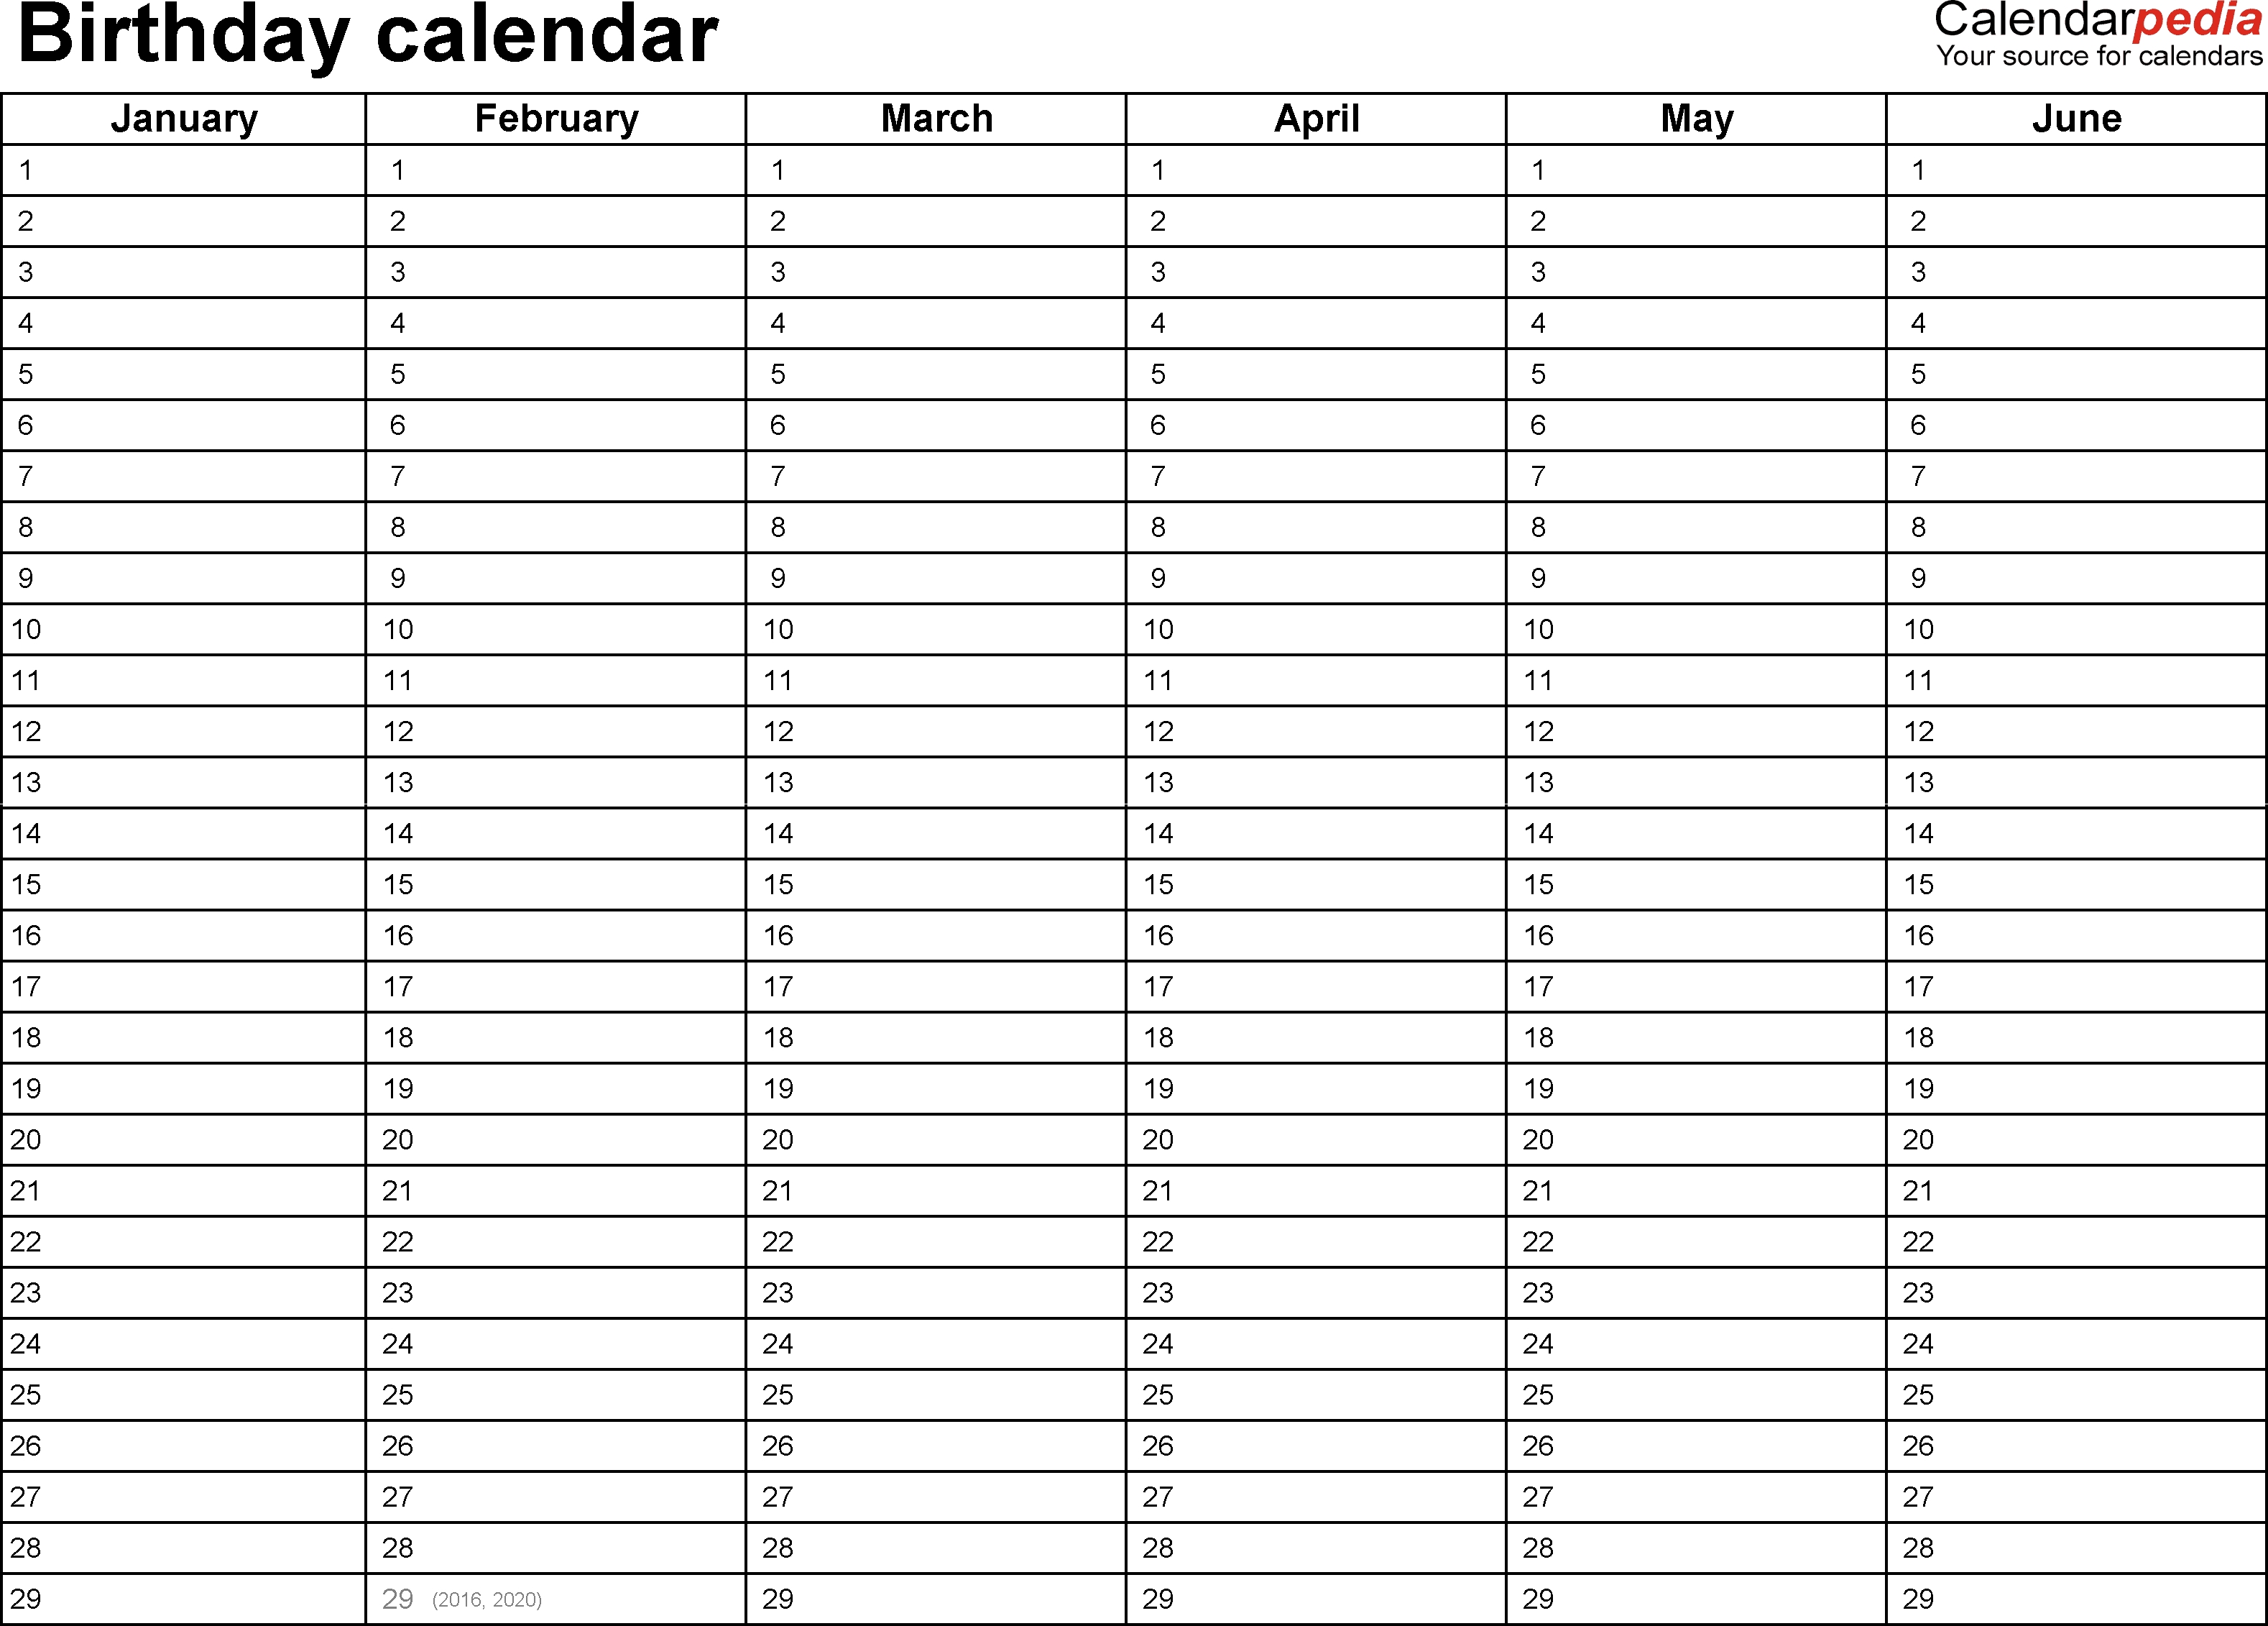 Birthday Calendars - 7 Free Printable Excel Templates pertaining to Free 12 Month Birthday Calendar Template